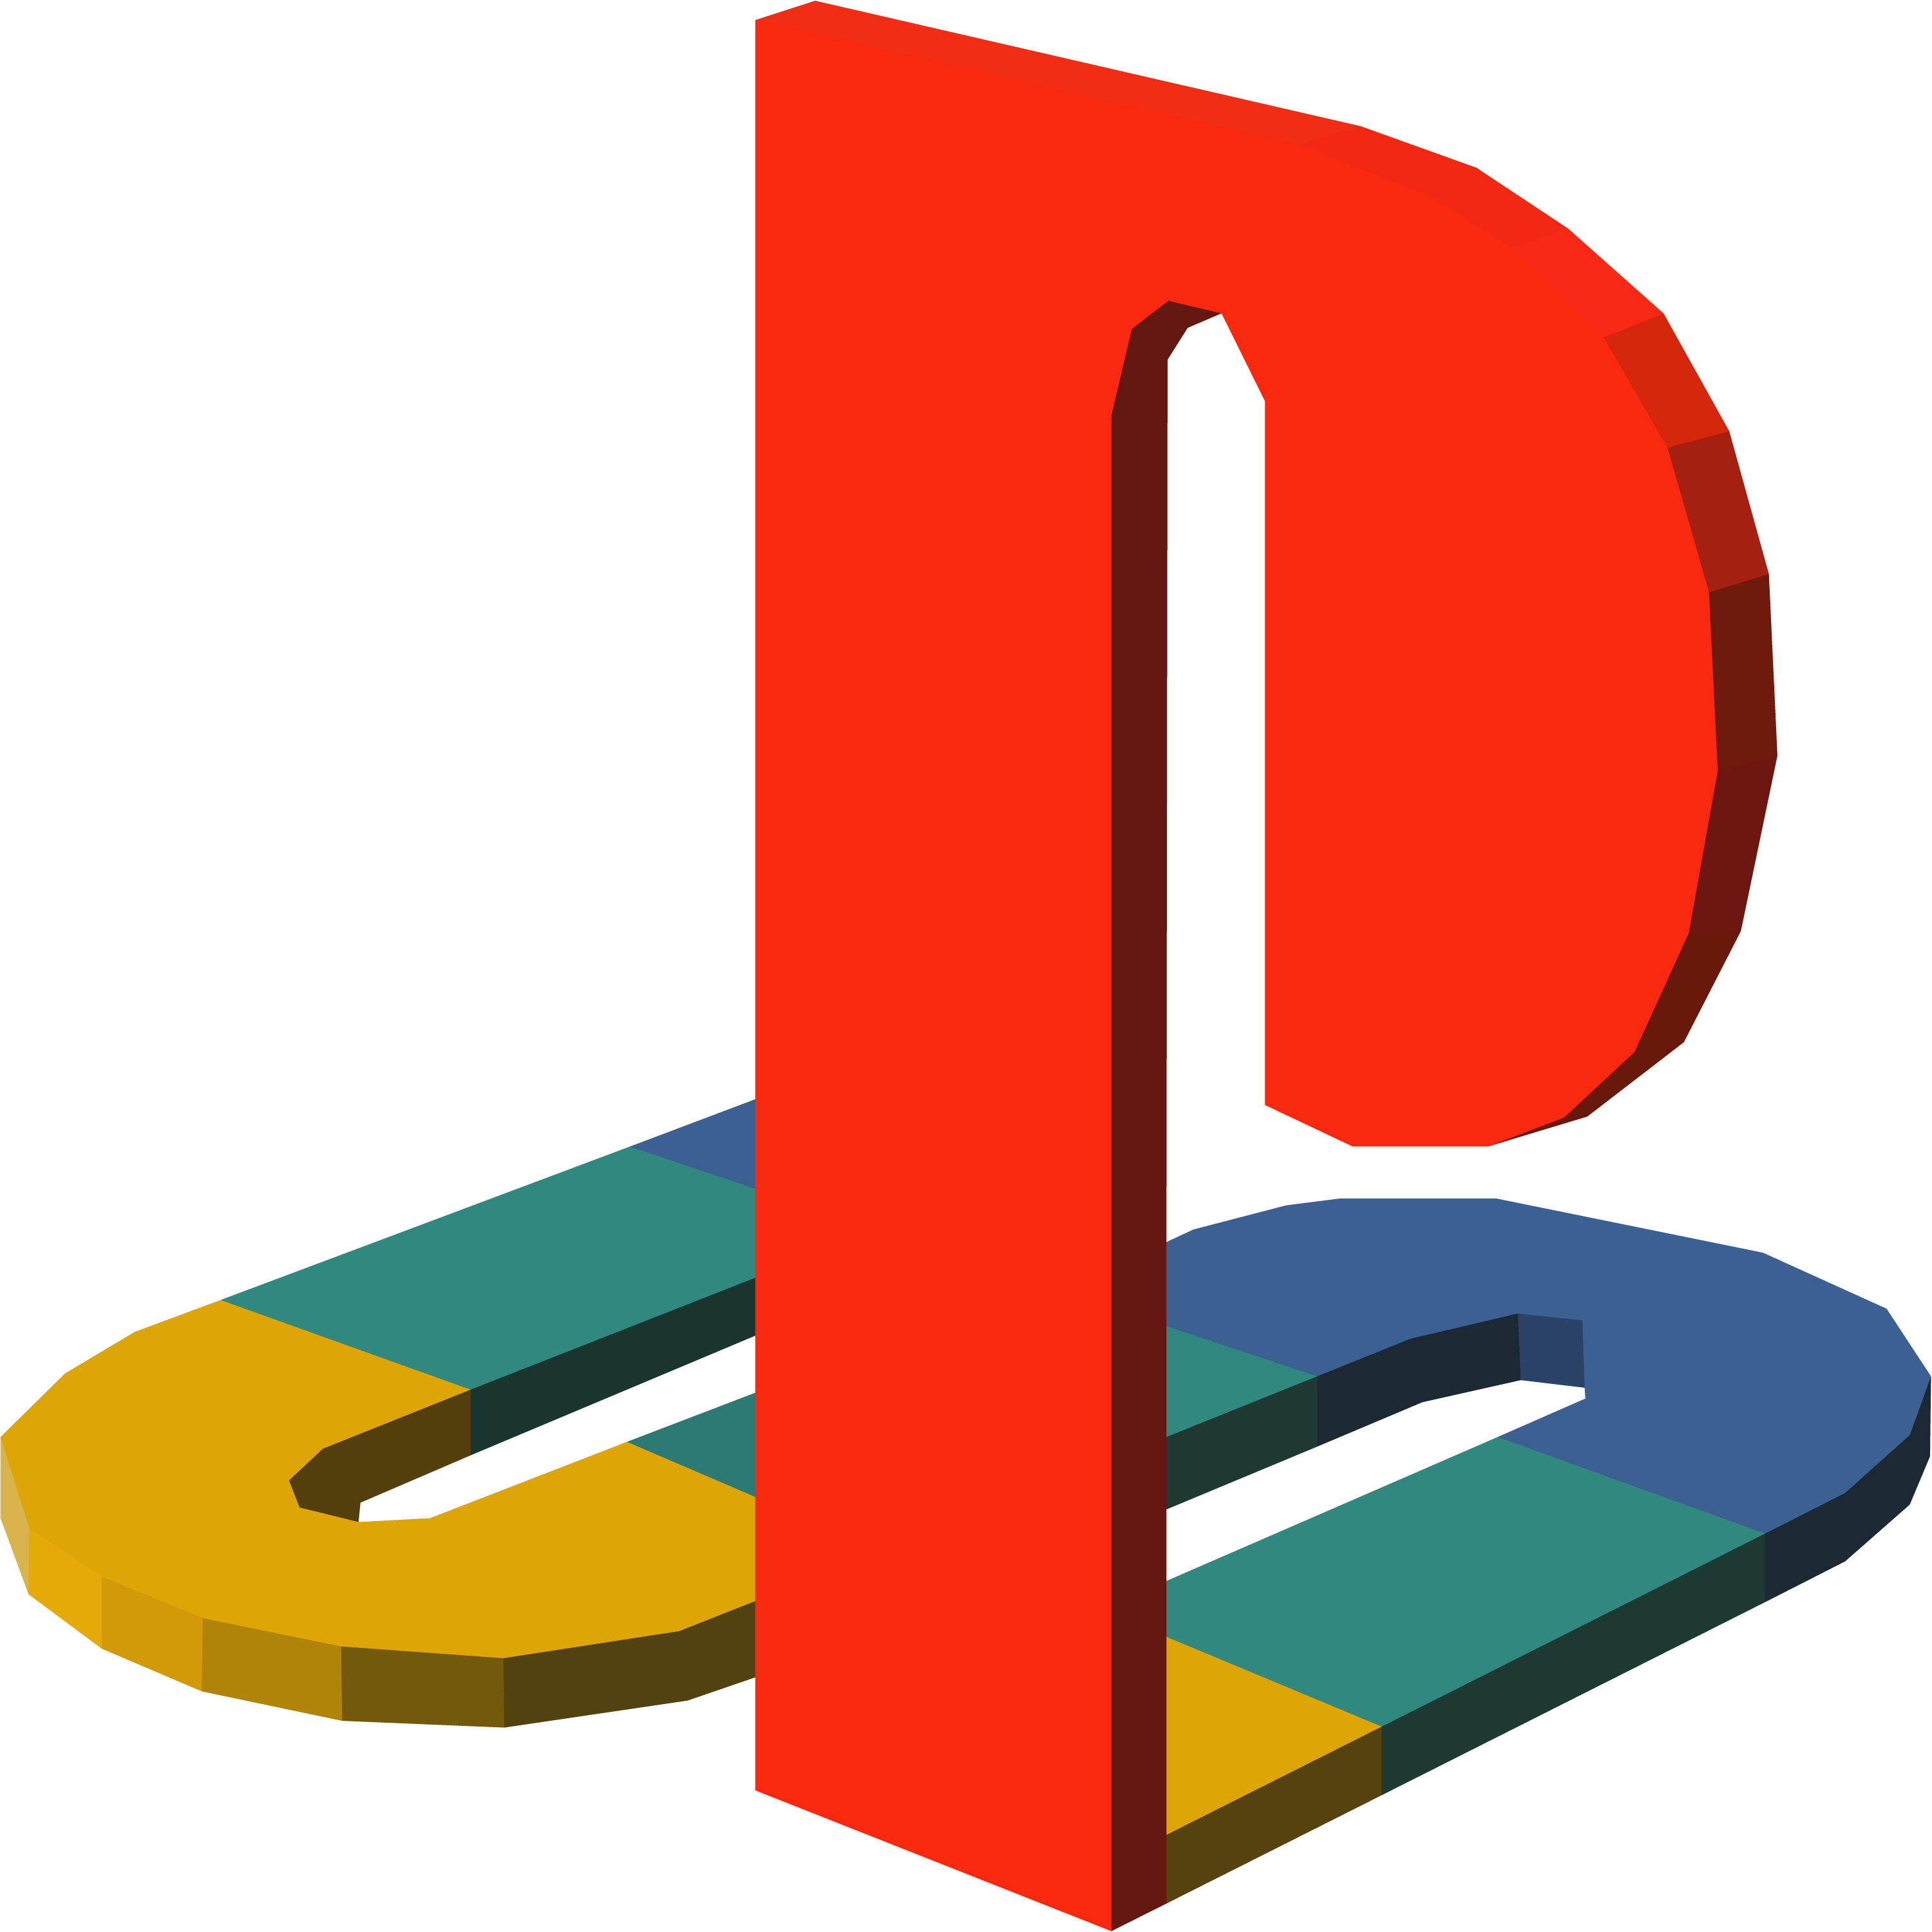 Sony PLAYSTATION лого